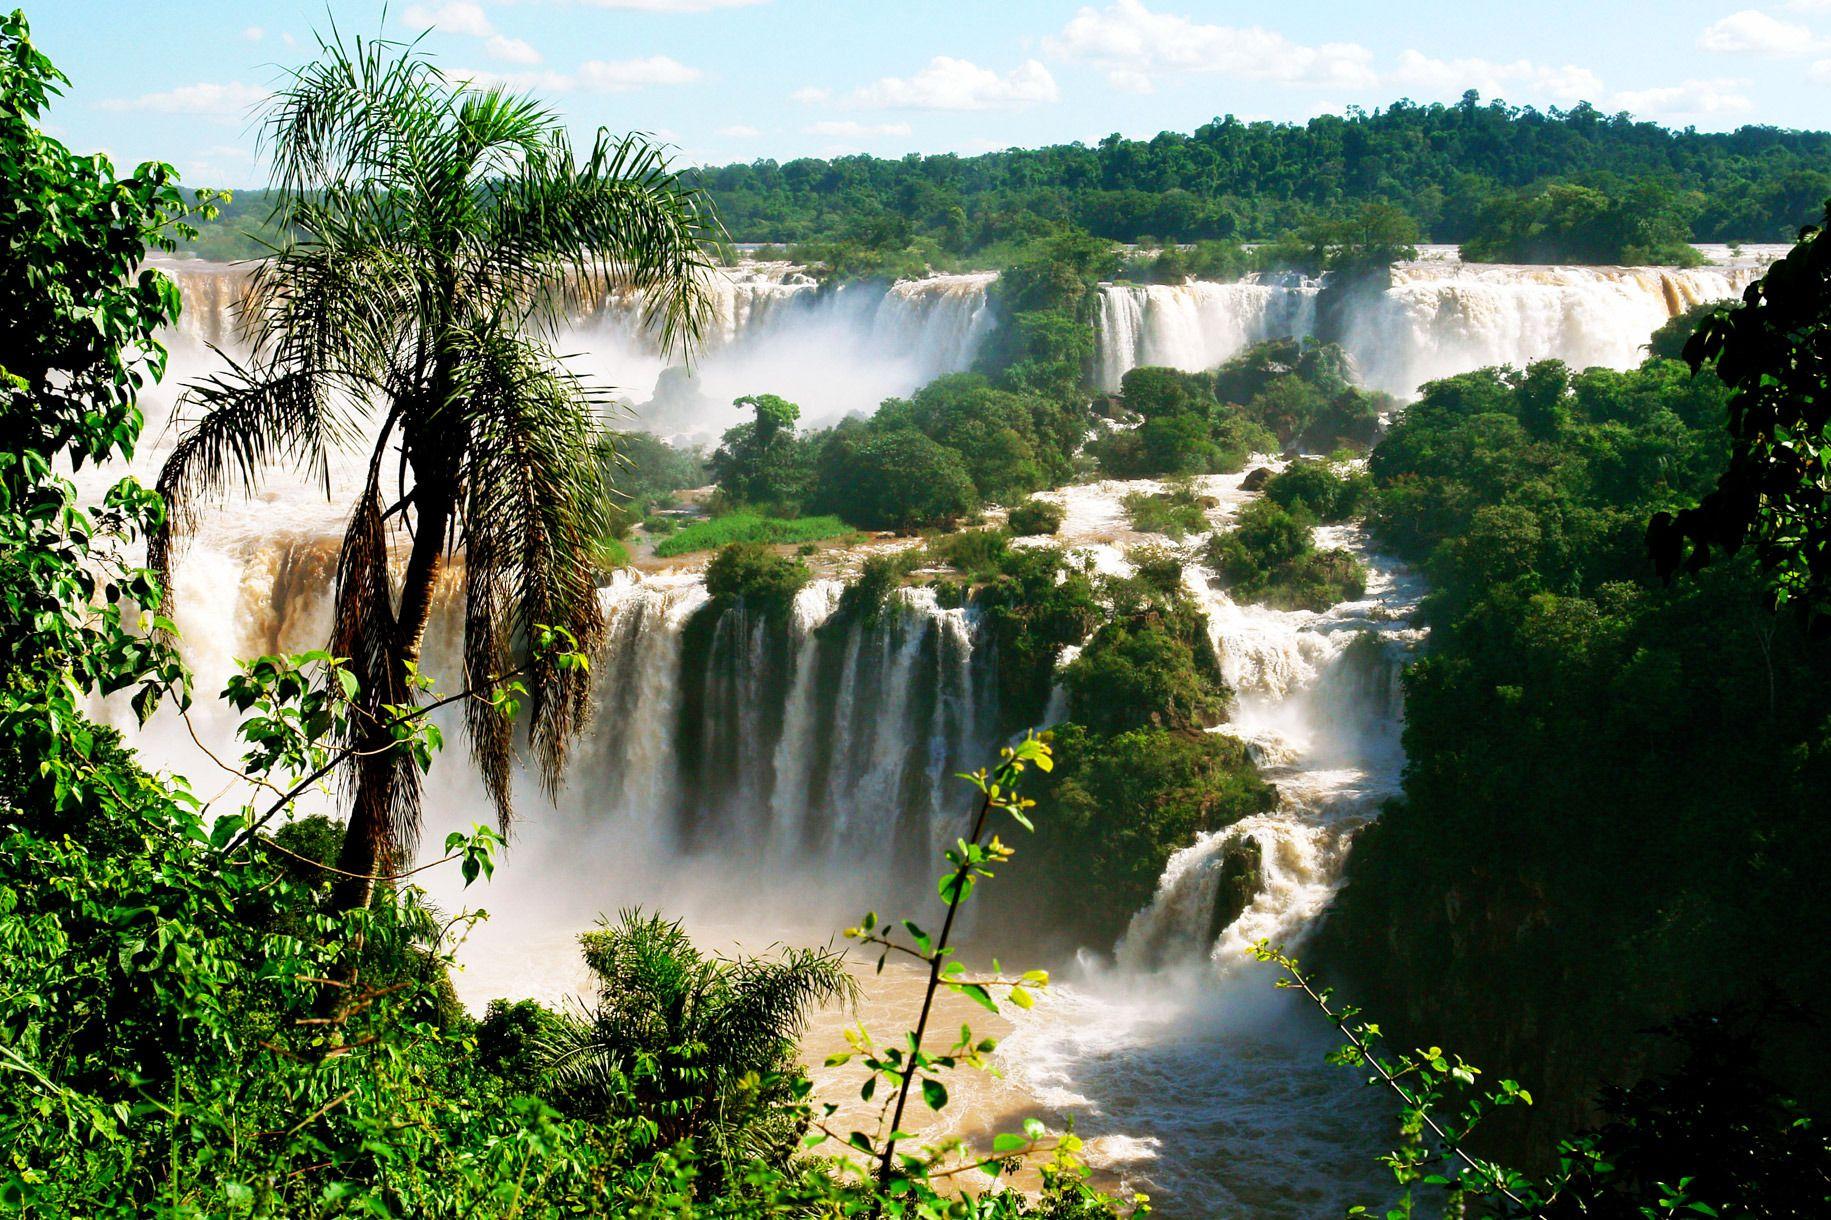 Brazil or Argentina for Iguazu Falls?